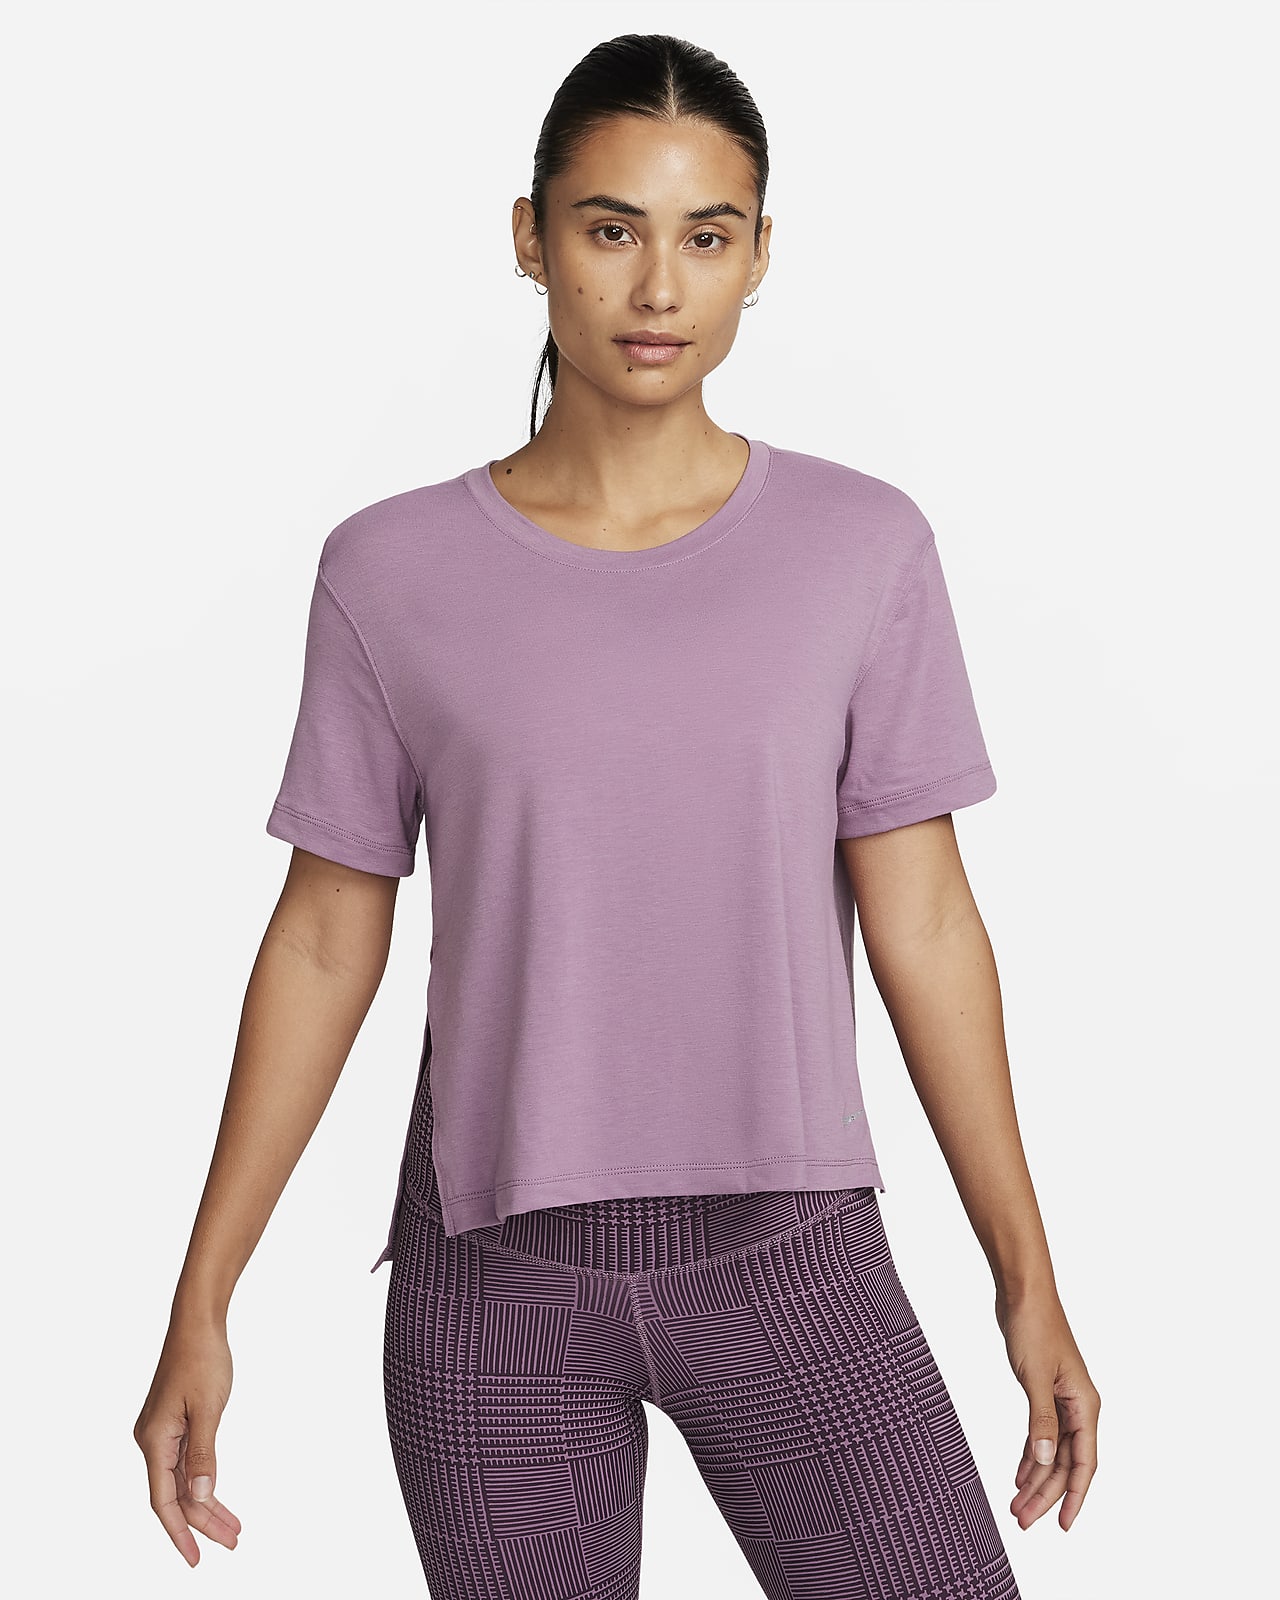 Nike Yoga Tall dry t-shirt in gray